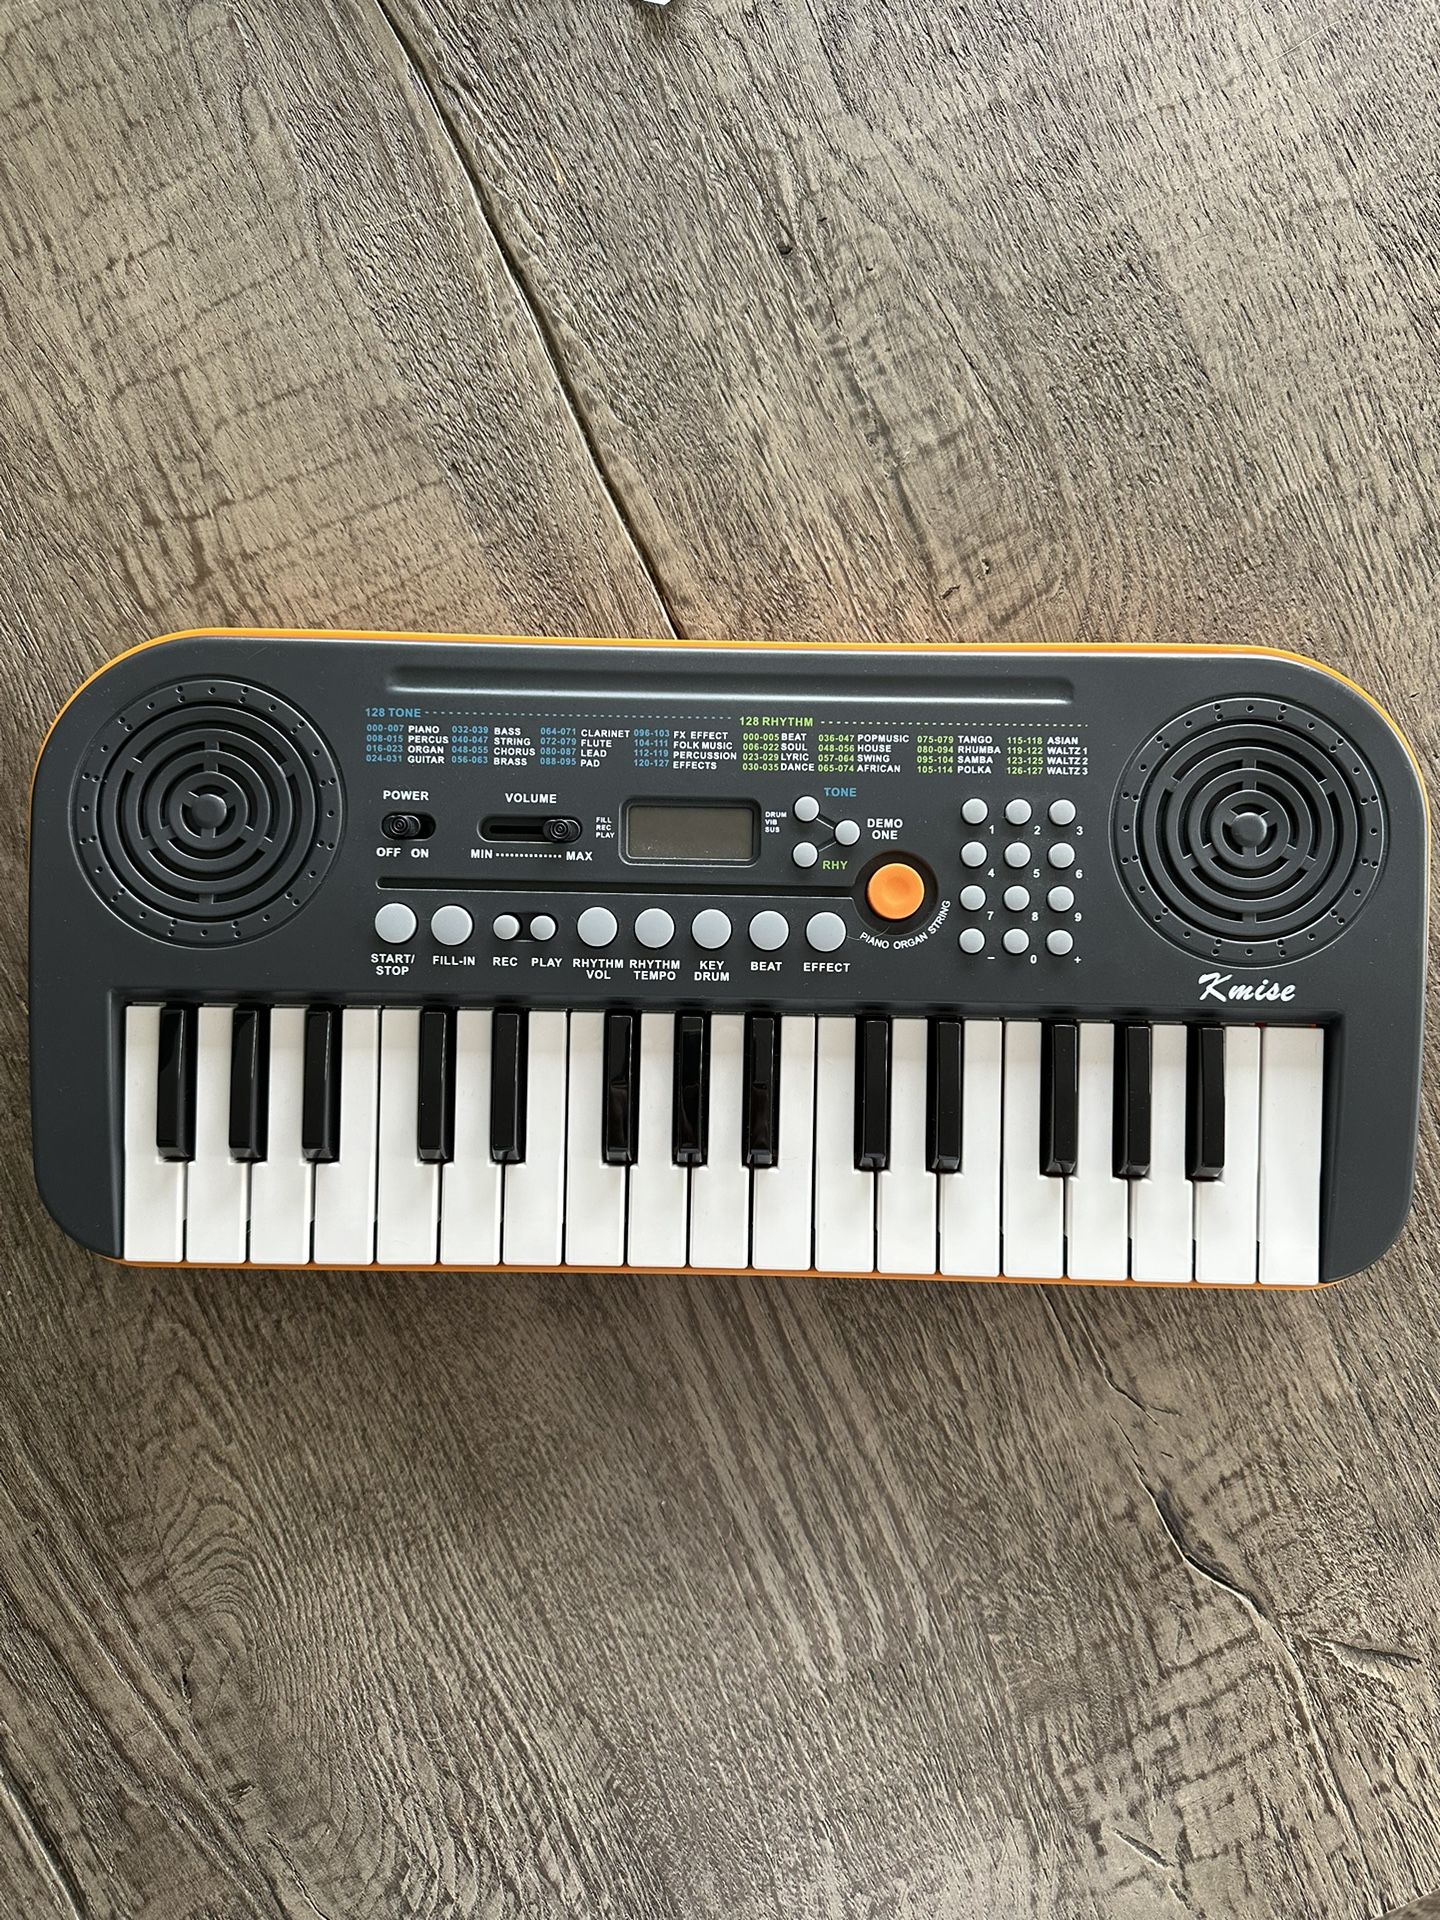 100% Brand New Unused Mini Electric Keyboard For Kids